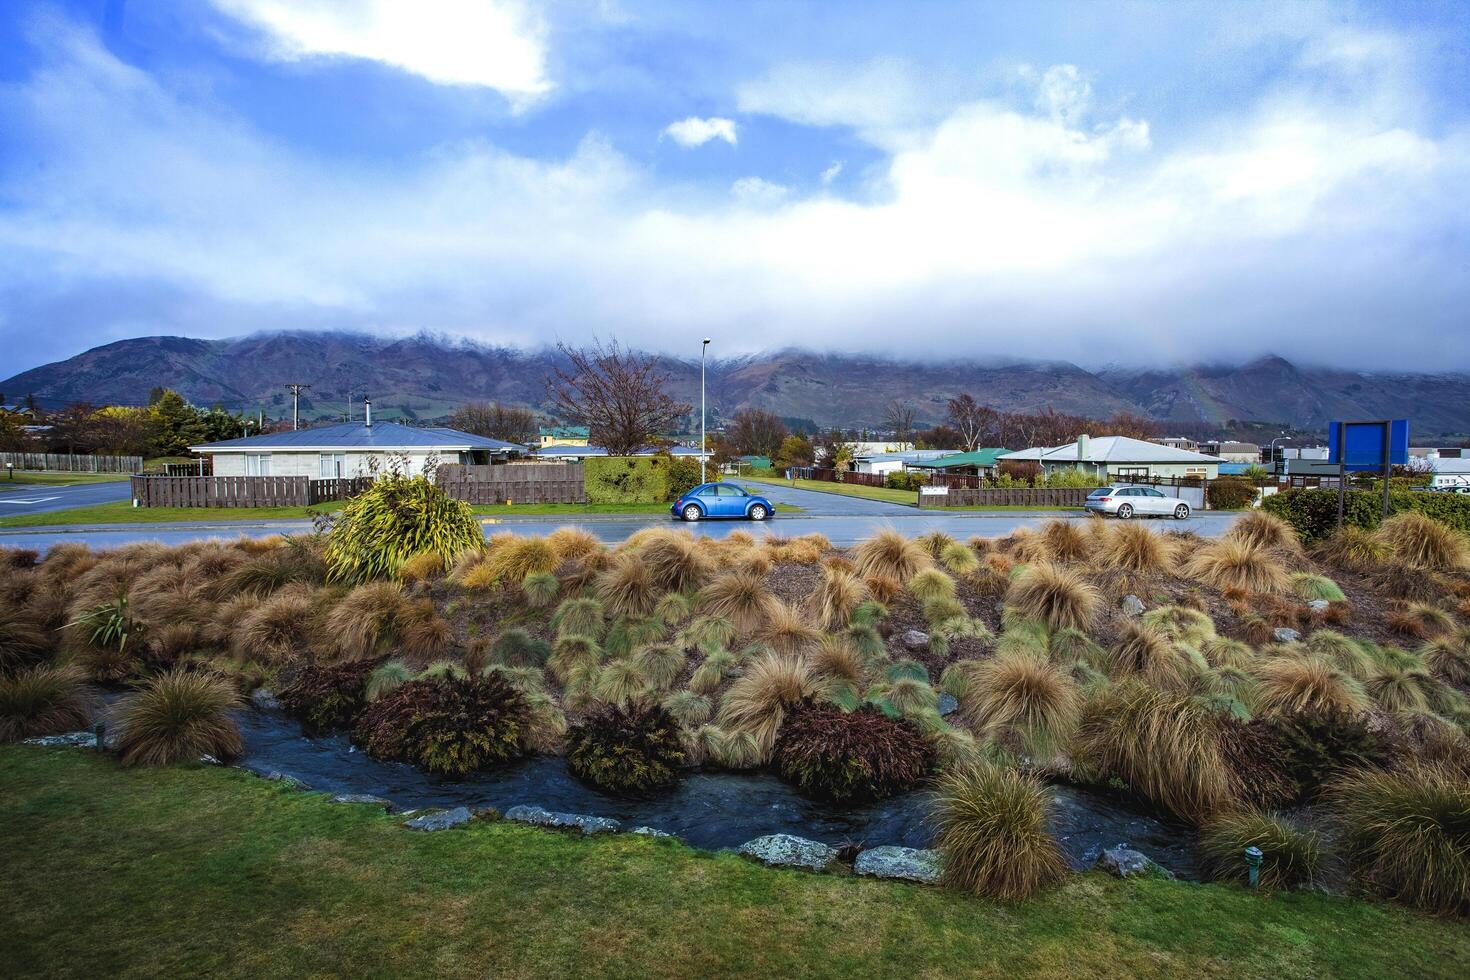 Wanaka Stadt, Dorf Neu Neuseeland - - 5. September 2015 schön szenisch von Wanaka Stadt, Dorf Südland Neu Neuseeland foto